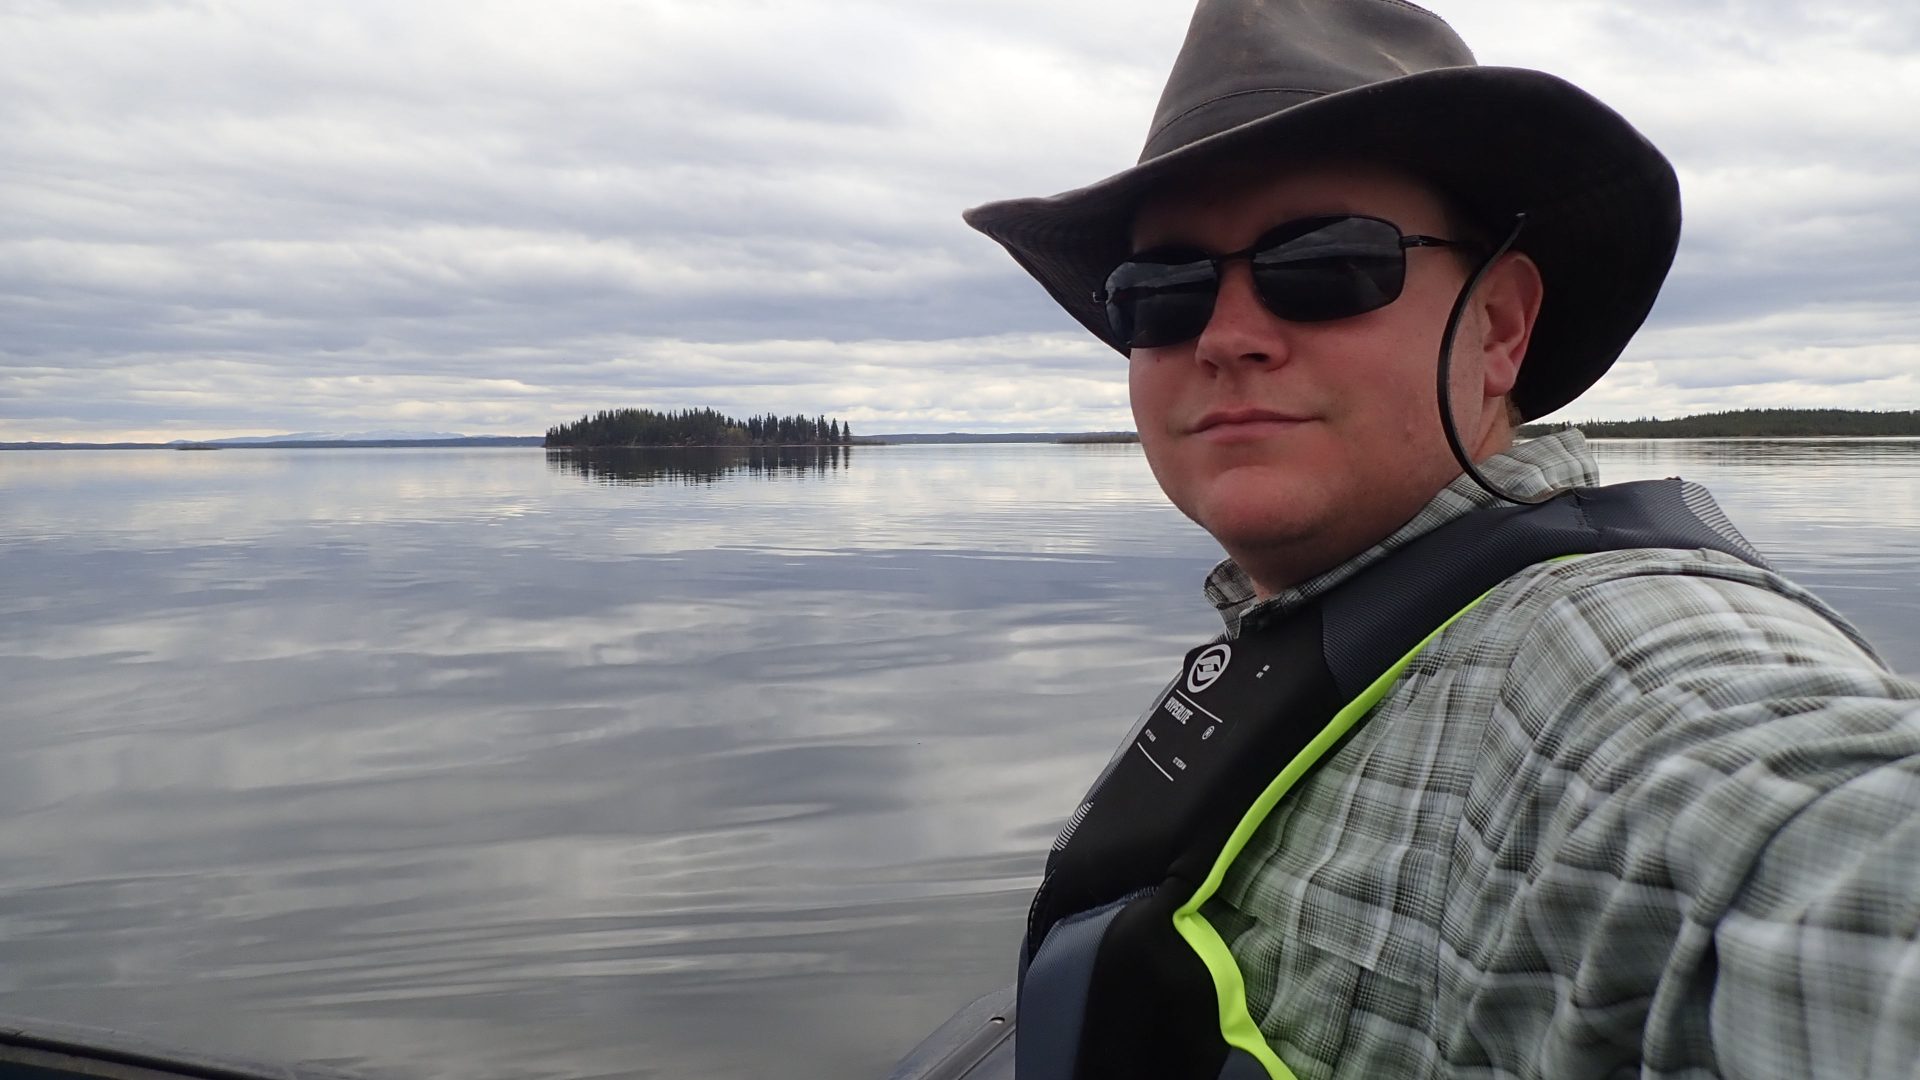 Self-portrait of me canoeing on Lake Louise, alaska